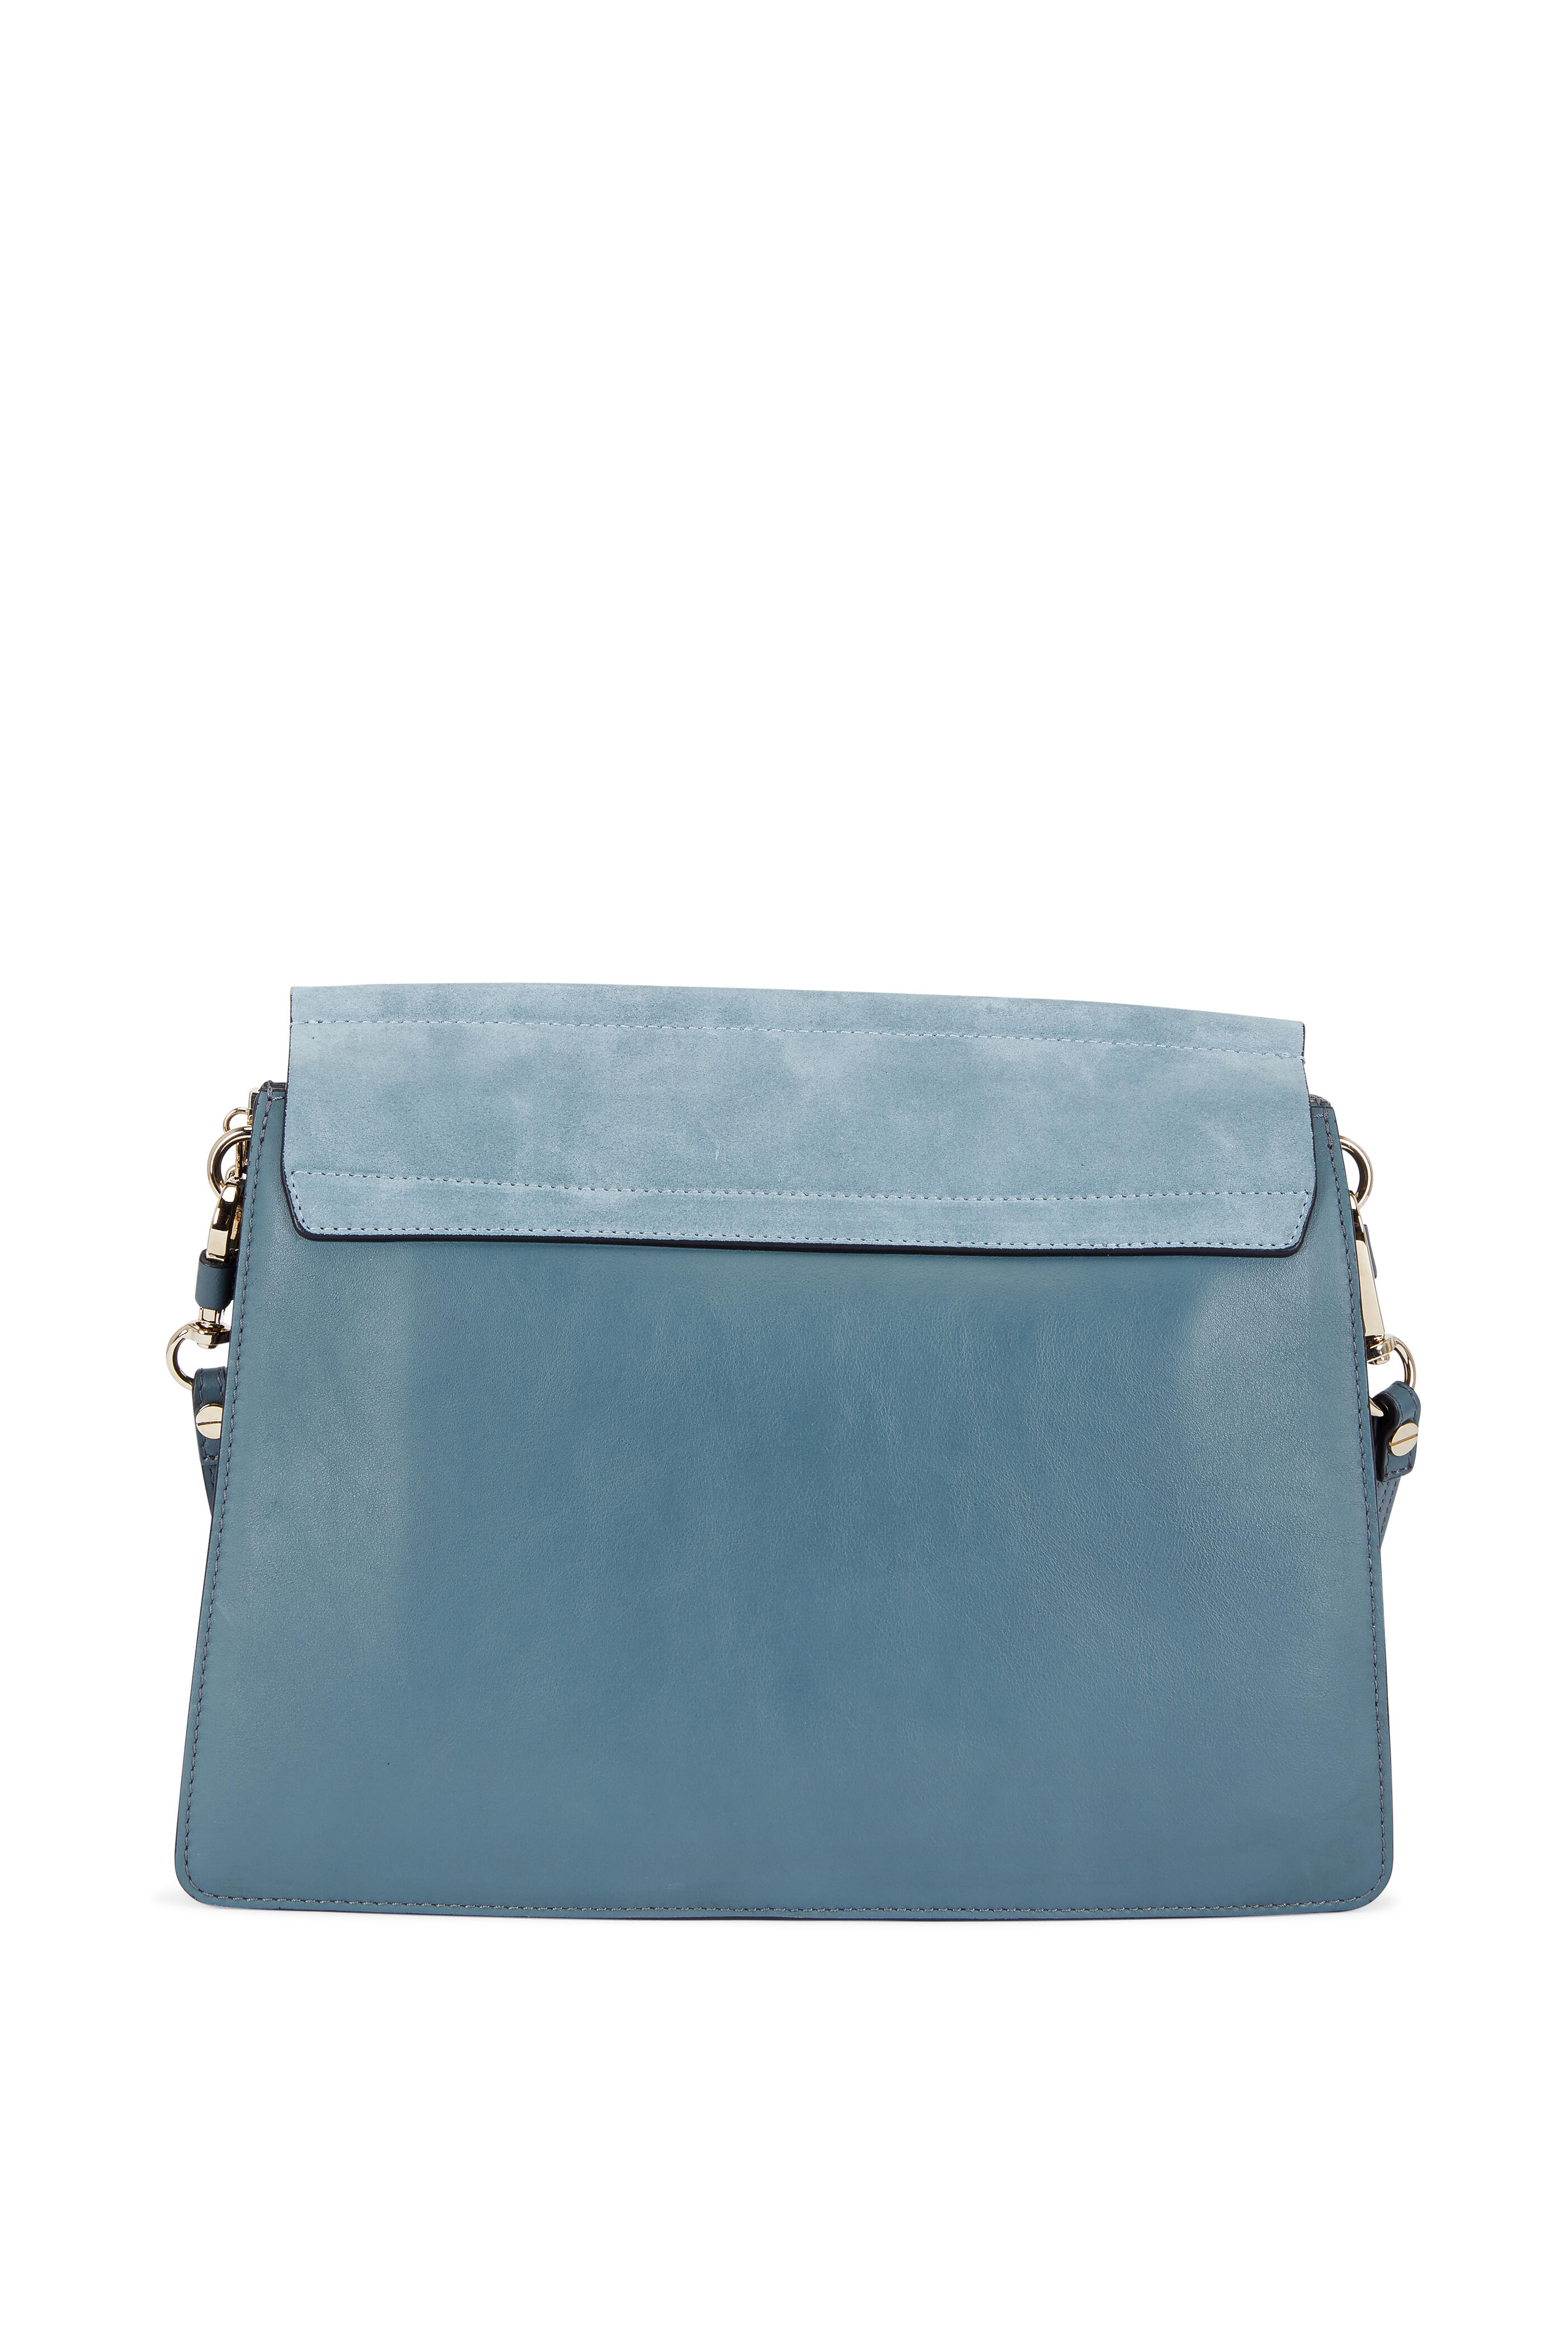 Chloe Fresh Blue Leather and Suede Faye Medium Shoulder Bag